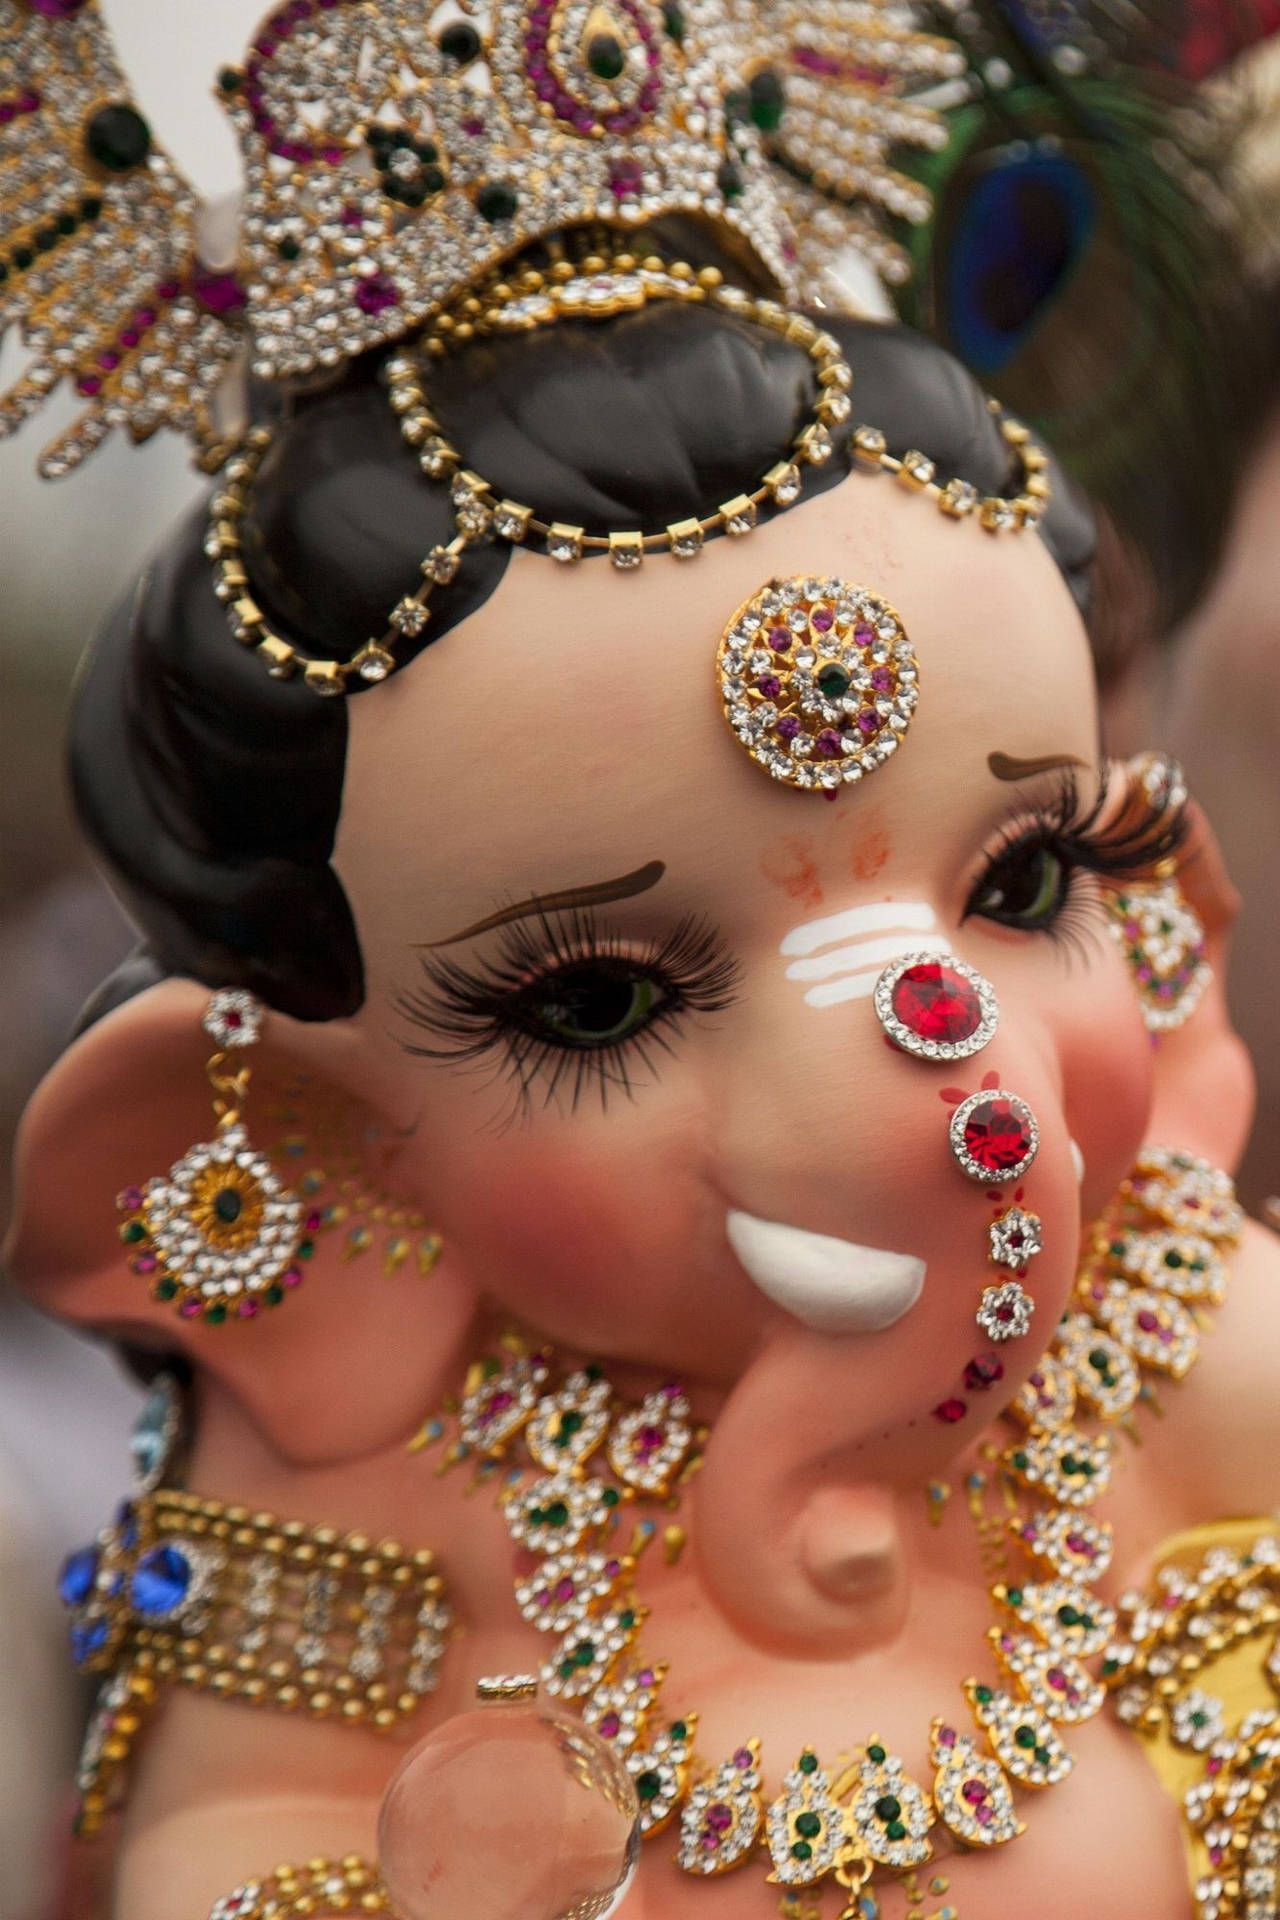 Baby Ganesh Crystal Ornaments Background